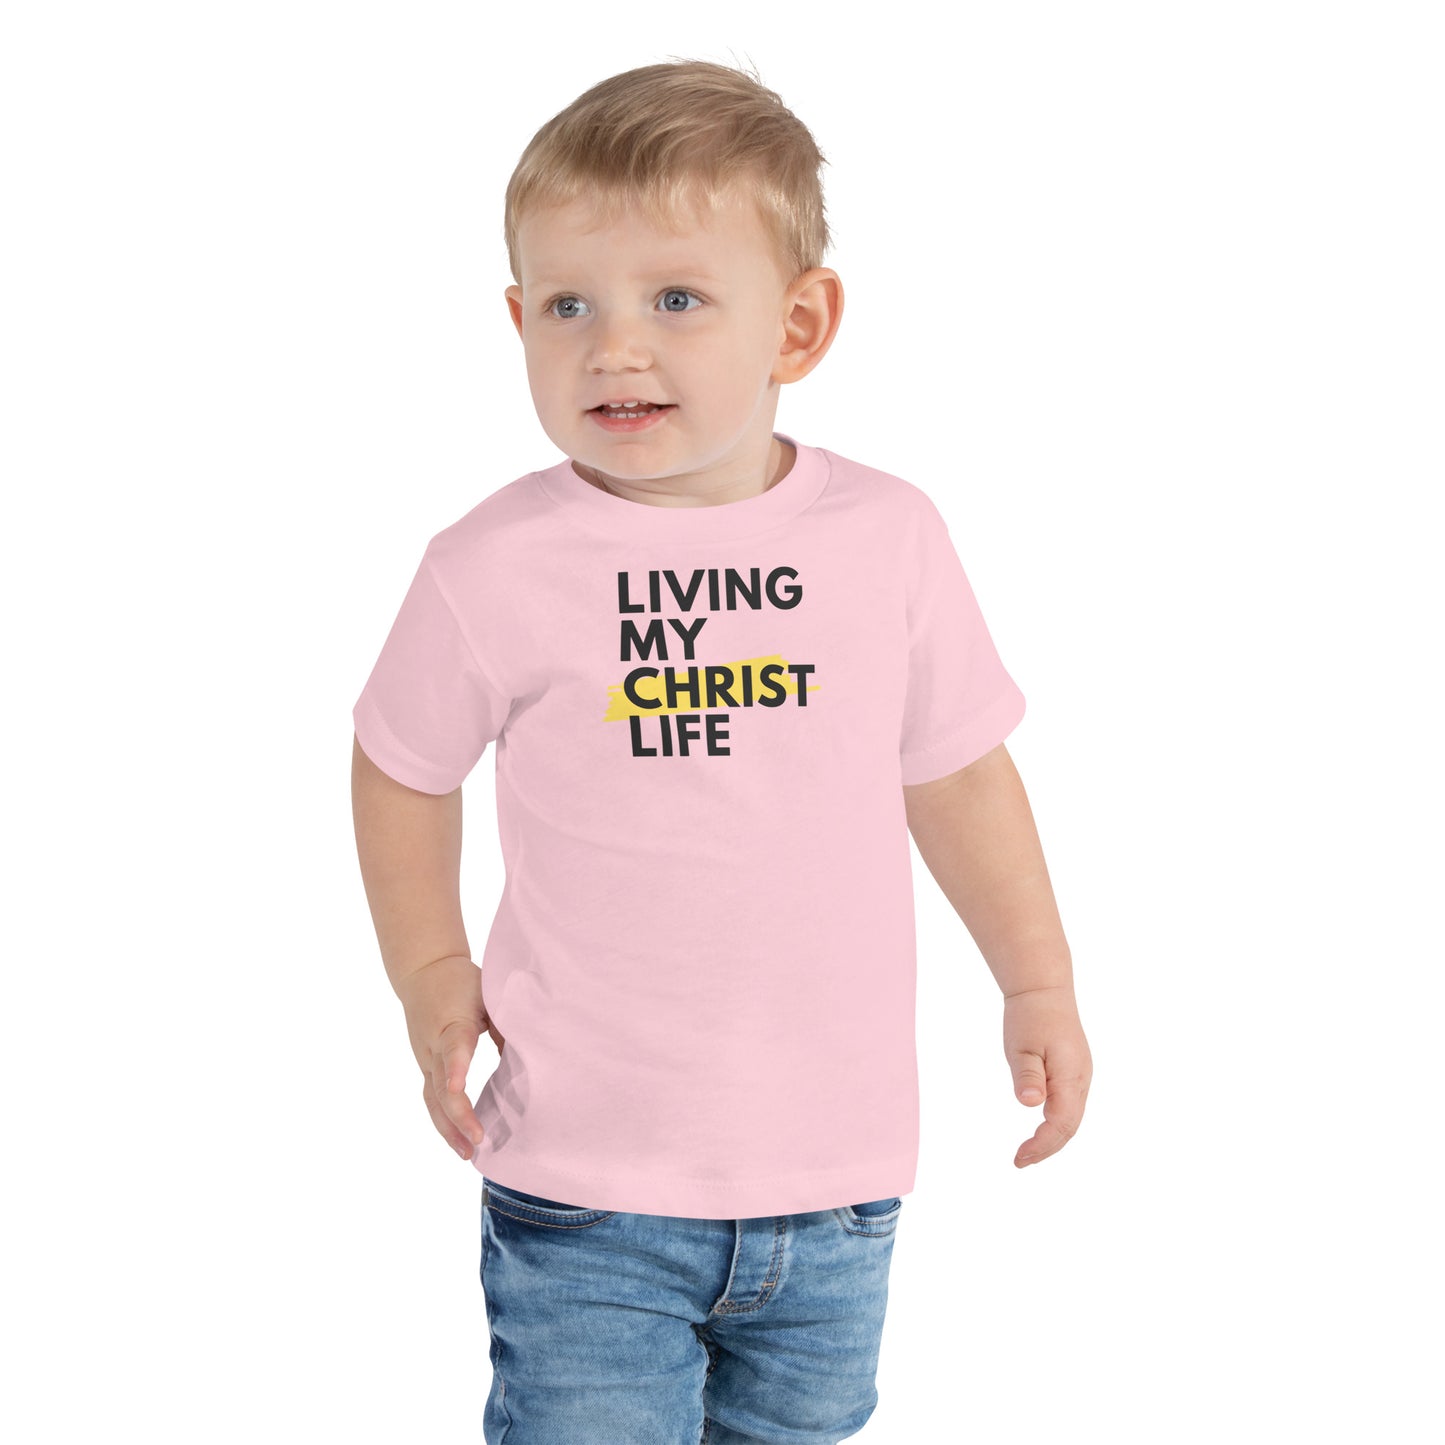 Toddler Christ Life shirt